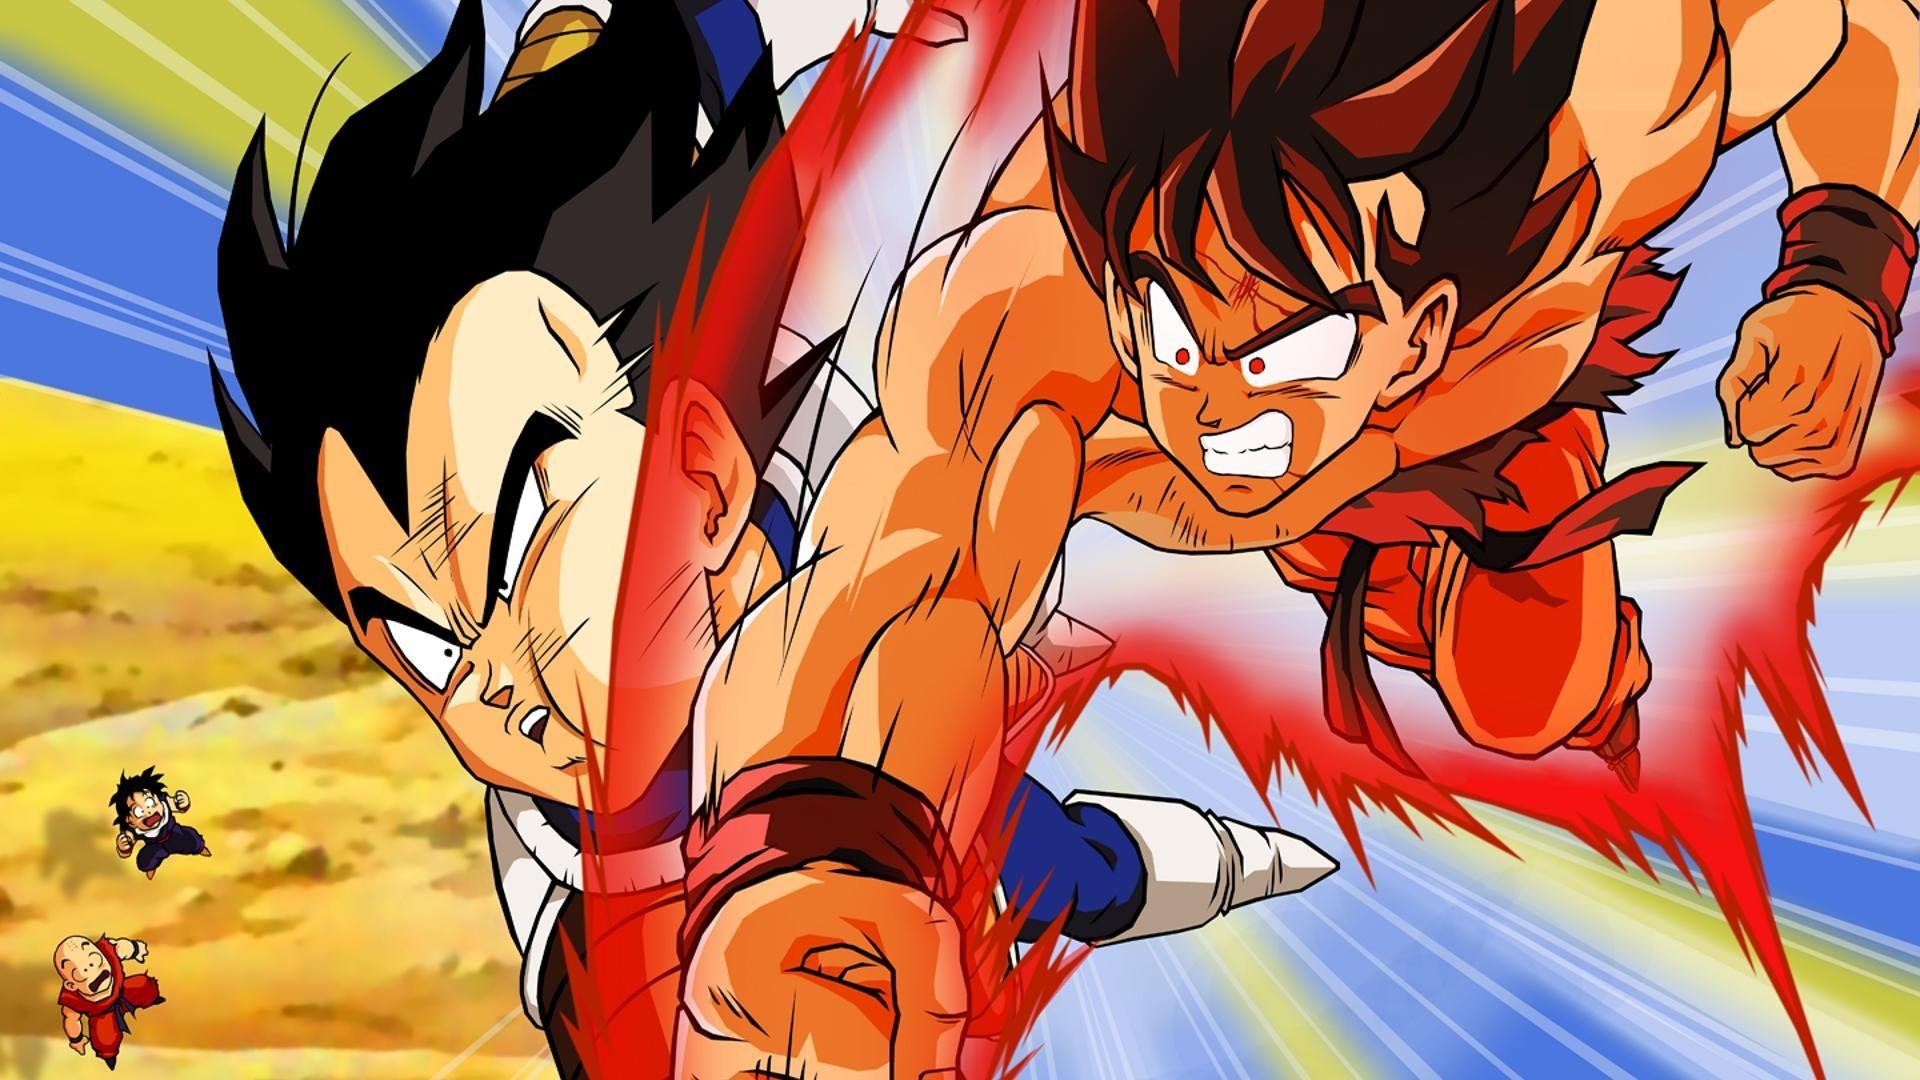 Goku vs Vegeta Wallpaper